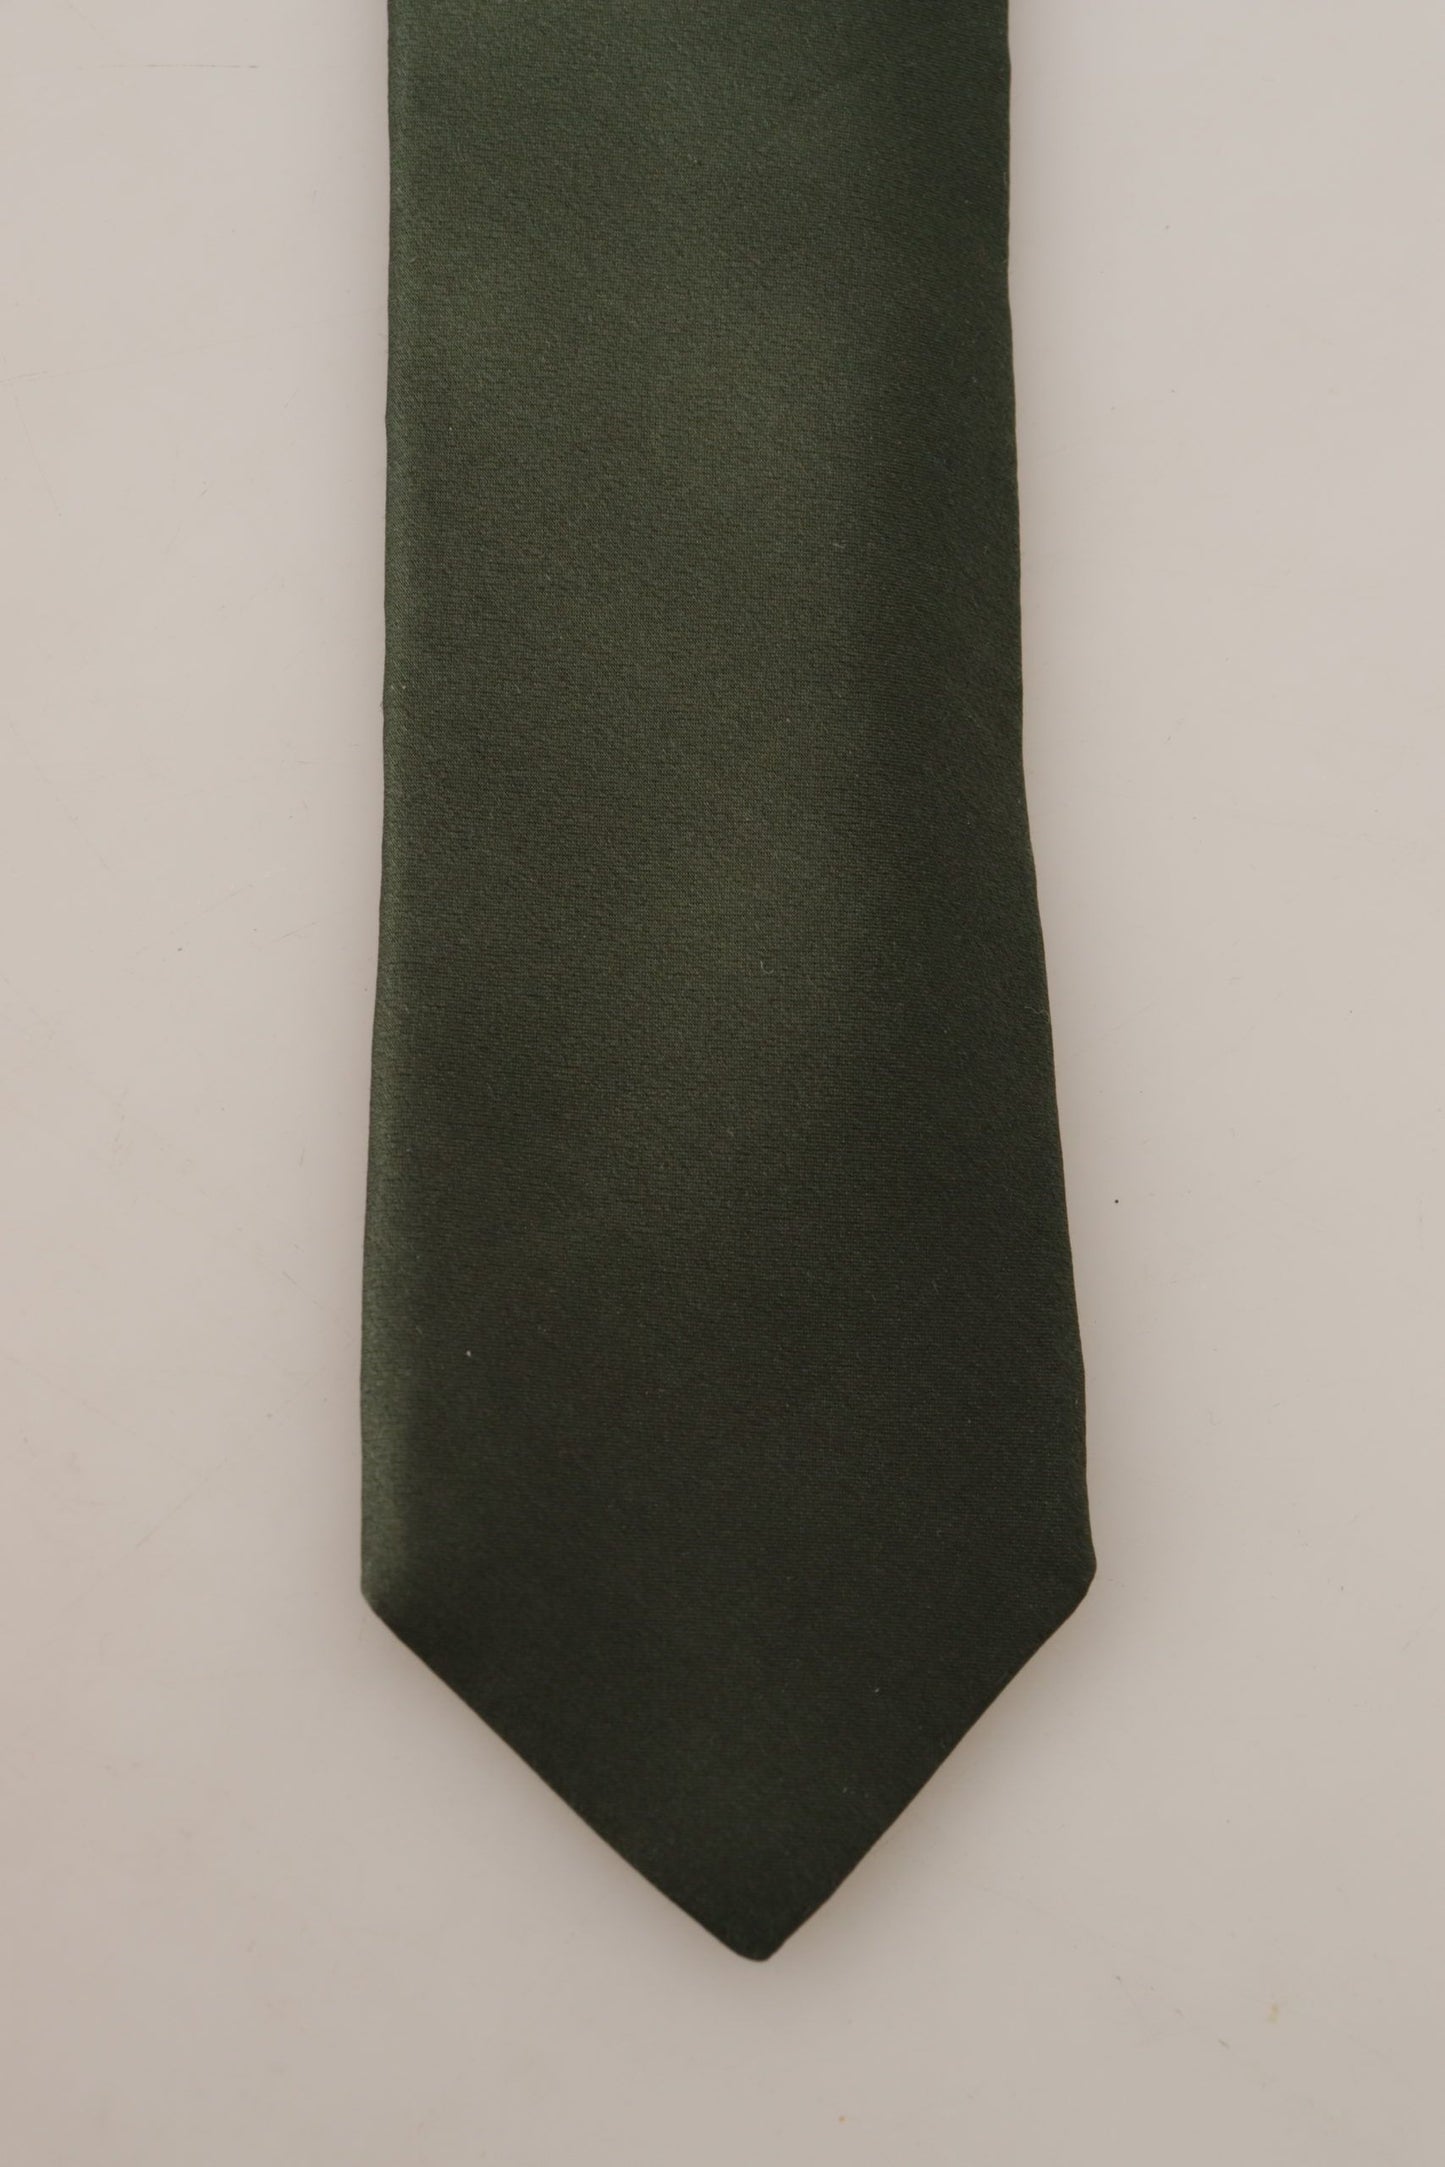 Elegant Green Silk Bow Tie